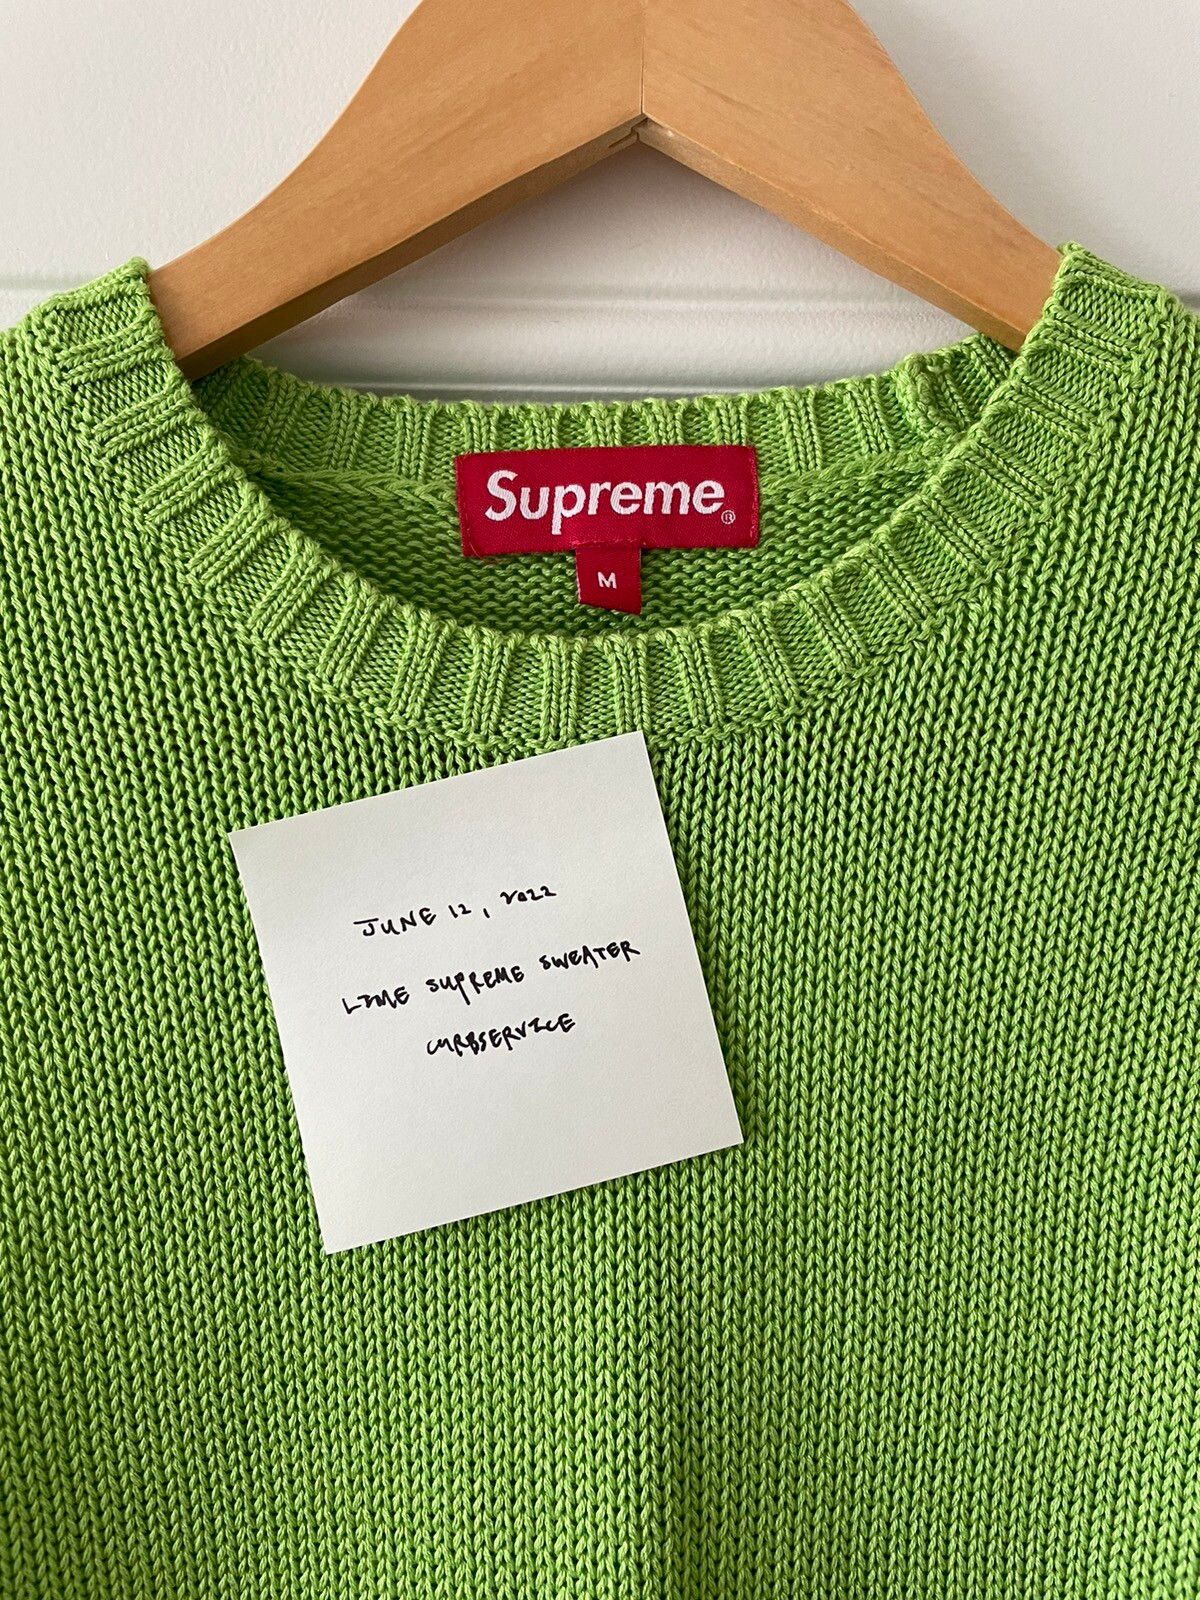 Supreme Back logo sweater | Grailed